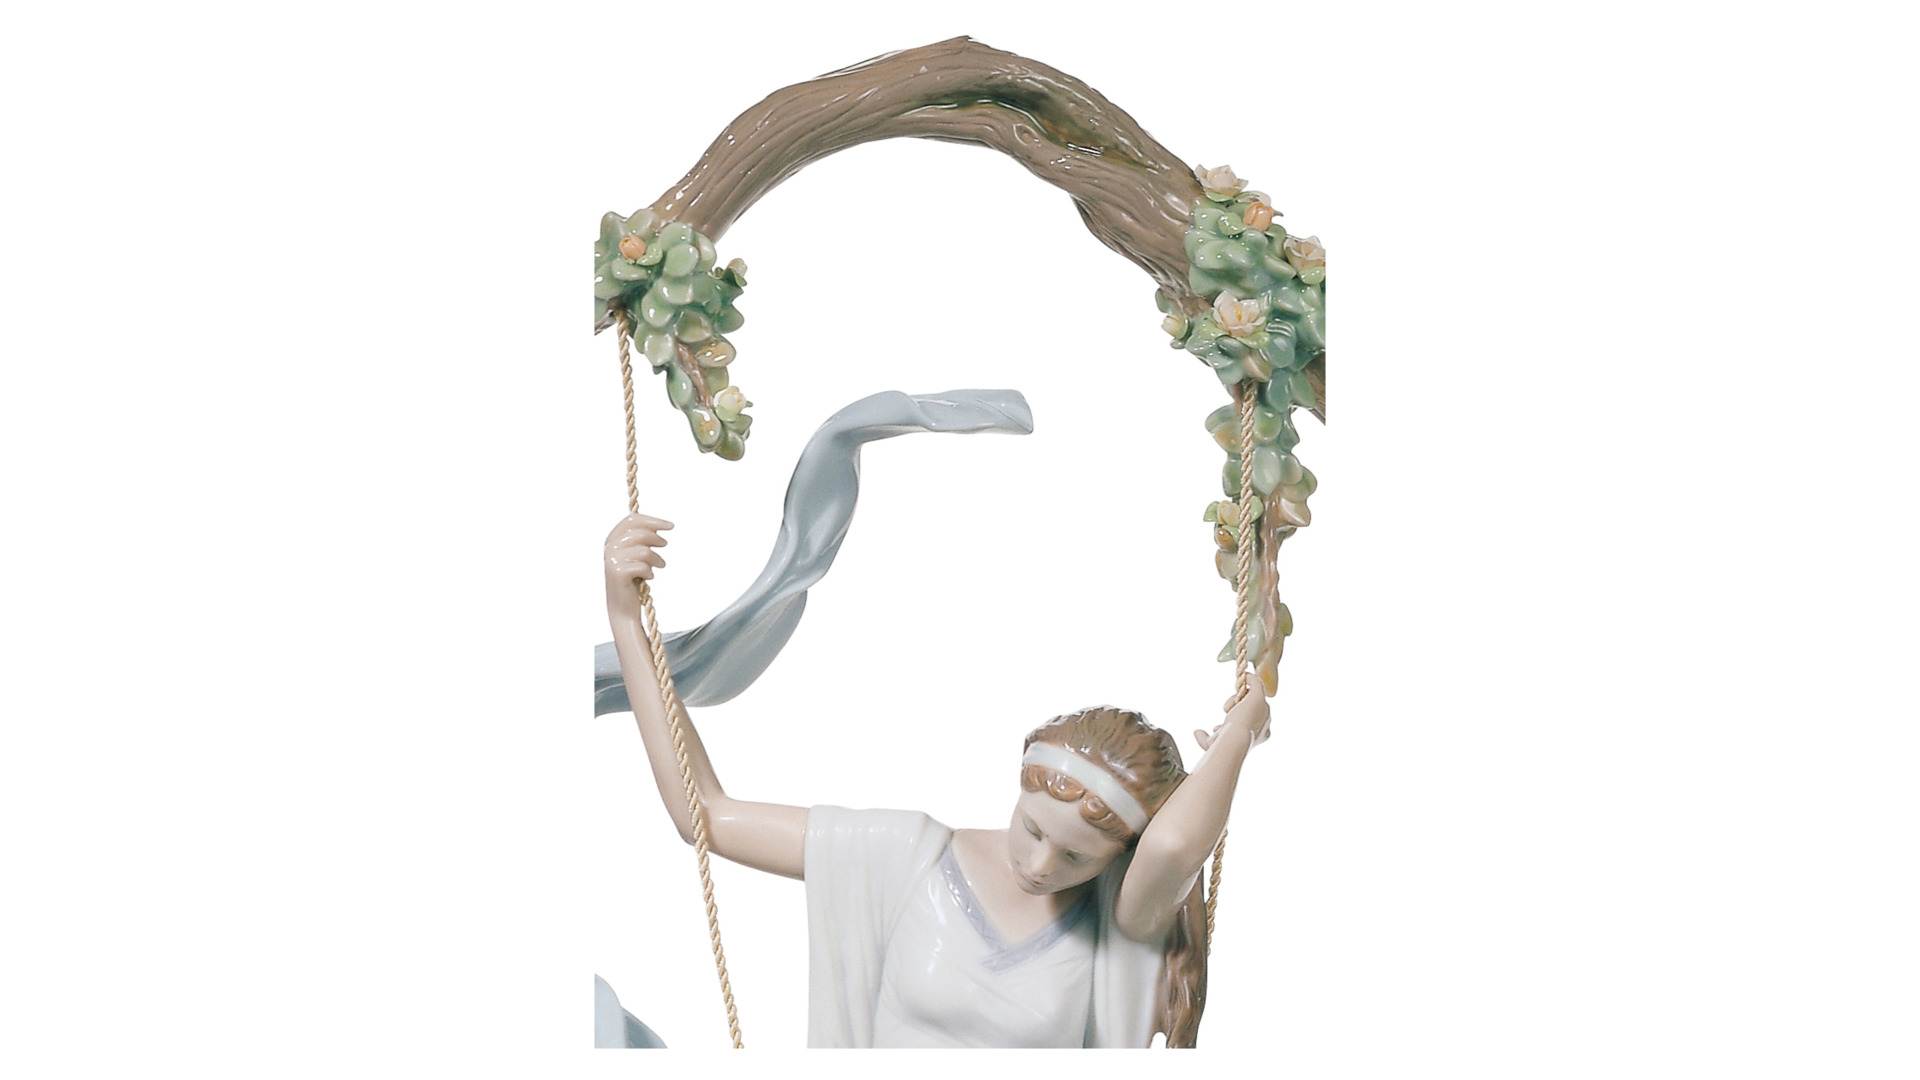 Фигурка Lladro Жизнь в мечтах 32x56 см, фарфор